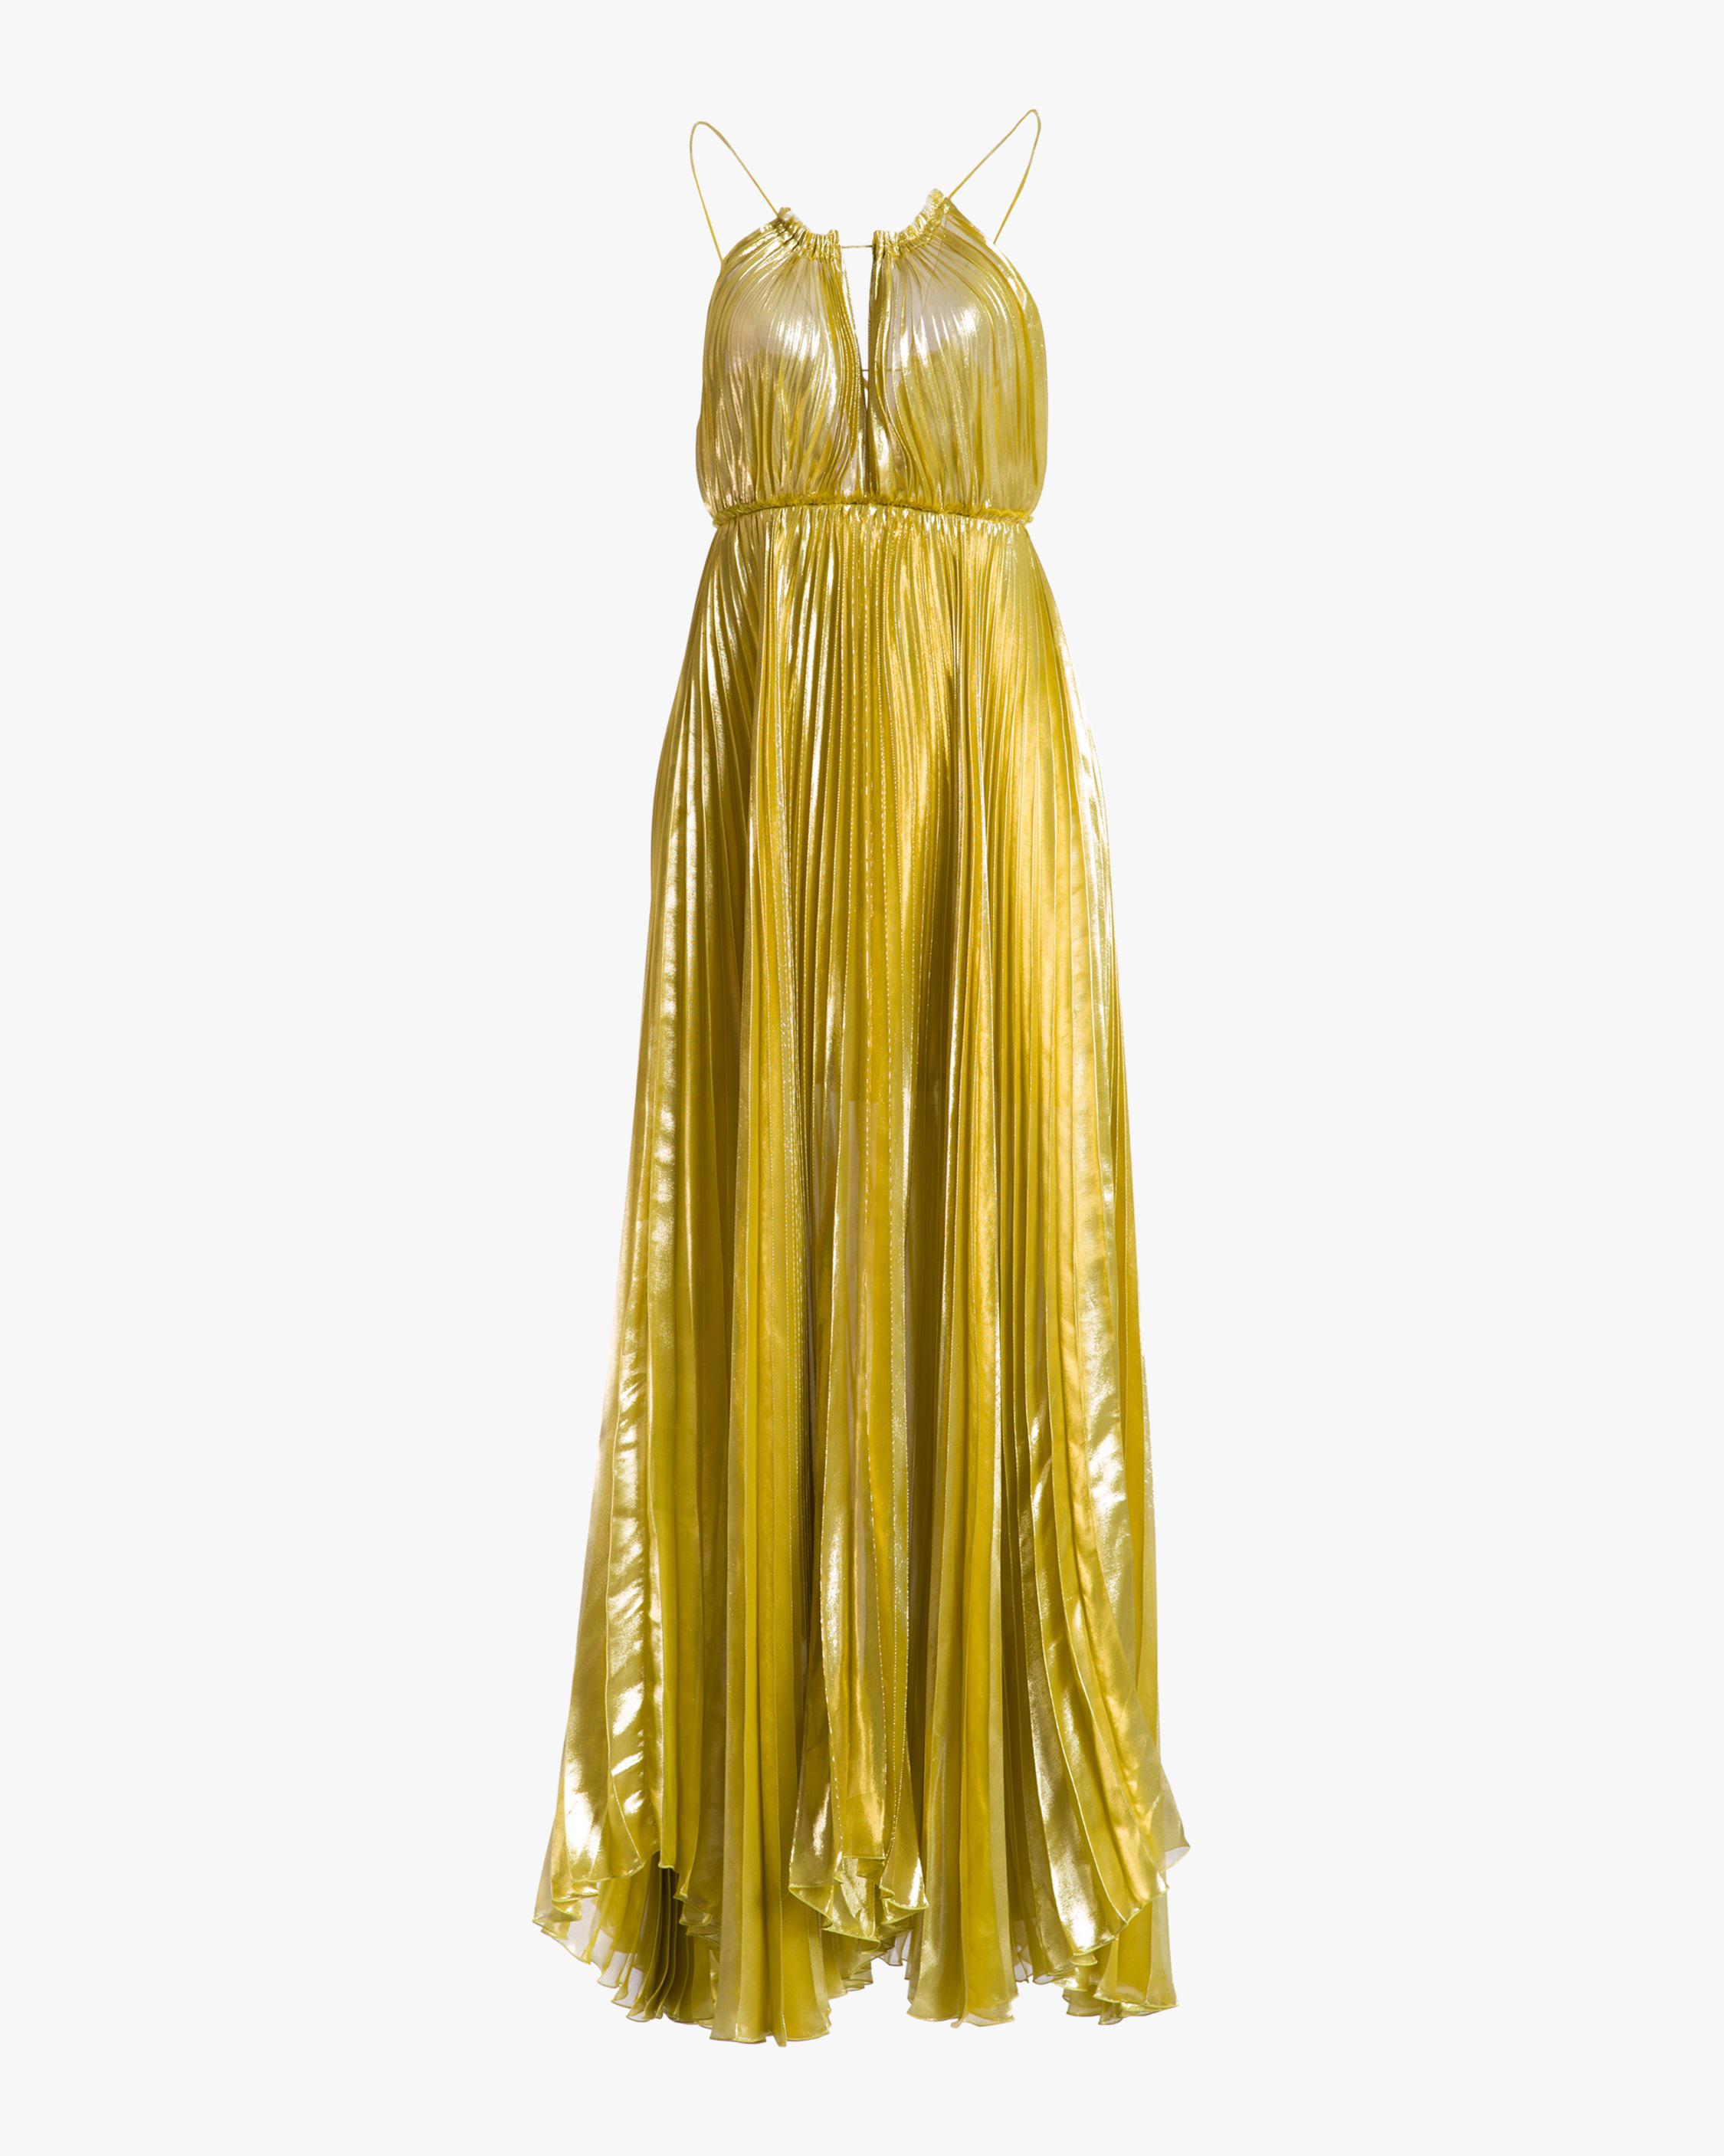 Maria Lucia Hohan Silk Sayan Dress in Gold (Metallic) - Lyst